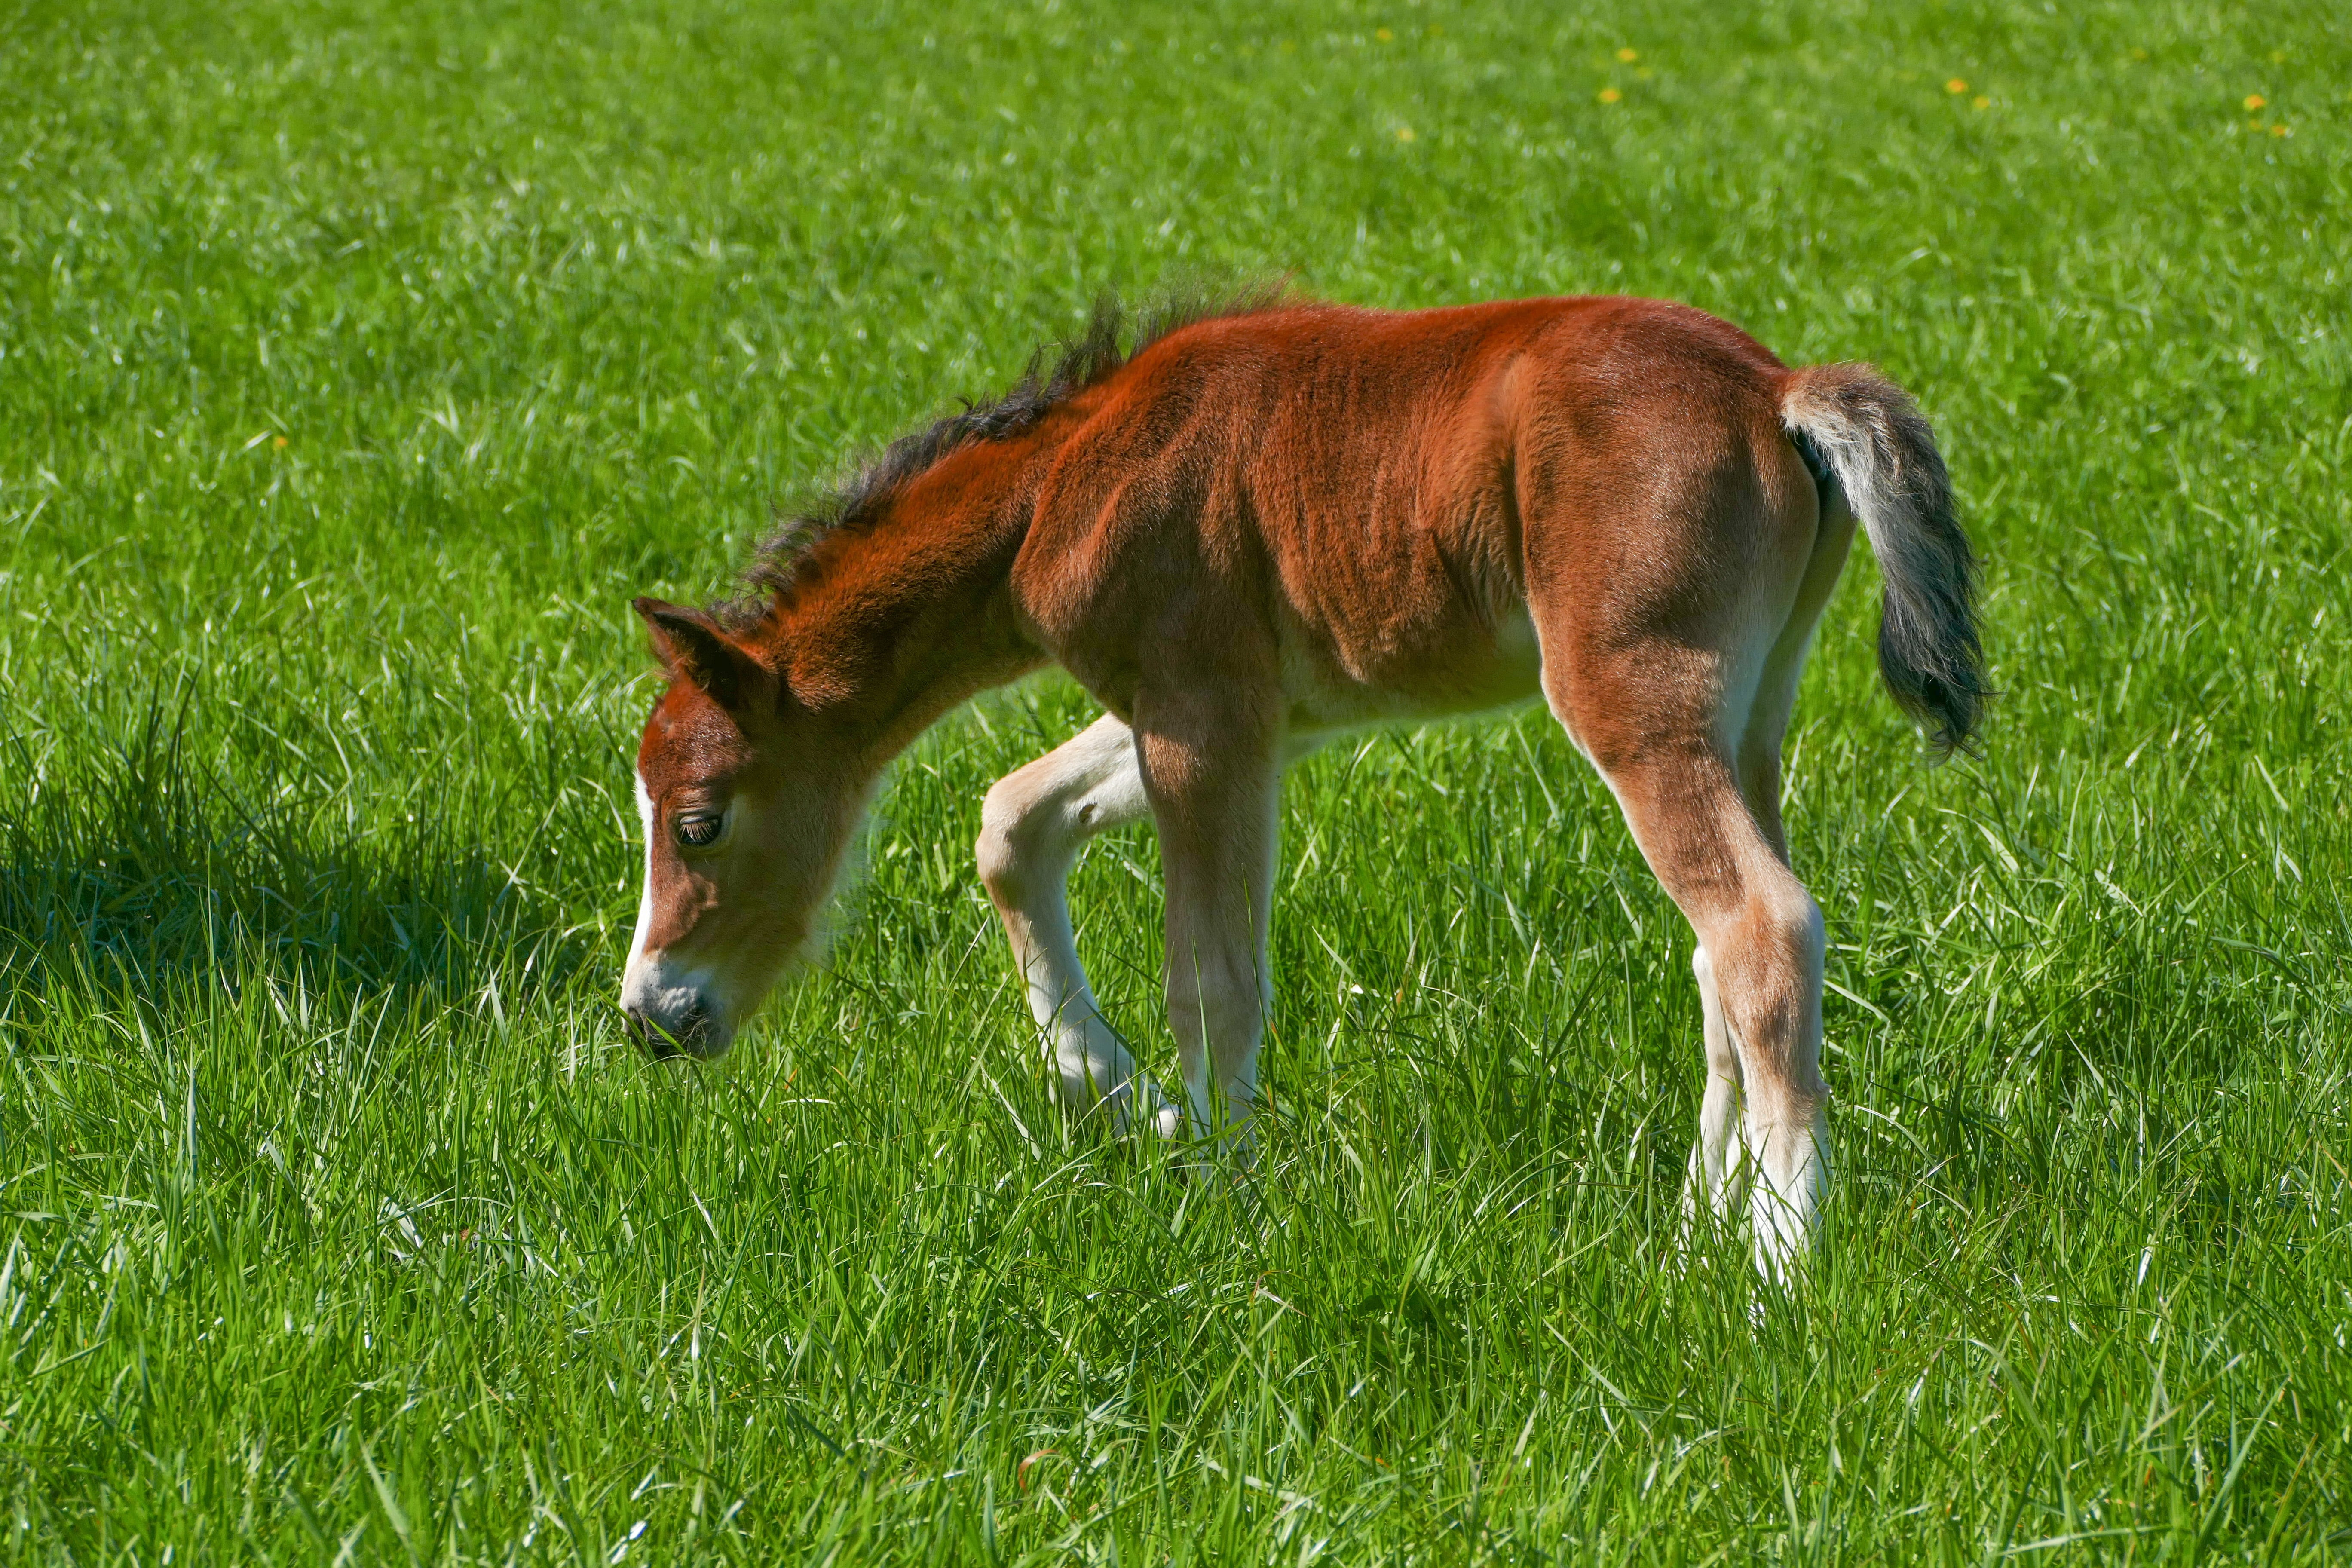 brown horse walking on grass field, colt, pony, white boots, blaze white